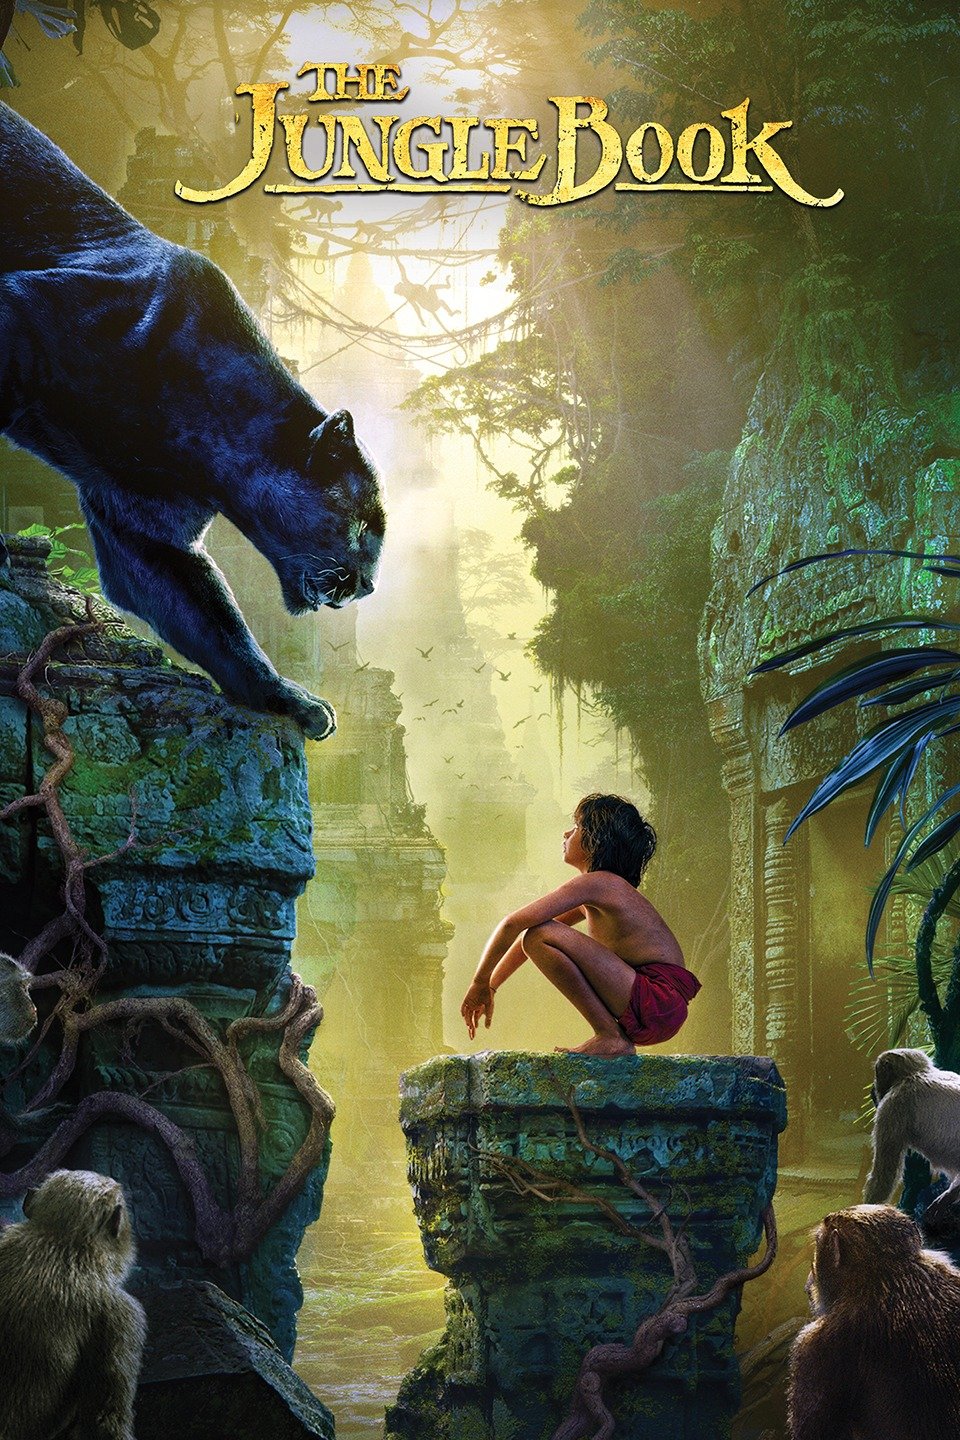 [MINI Super-HQ] The Jungle Book (2016) เมาคลีลูกหมาป่า [1080p] [พากย์ไทย 5.1 + อังกฤษ DTS] [BrRip.DTS.x264] [บรรยายไทย + อังกฤษ] [เสียงไทย + ซับไทย] [ONE2UP]